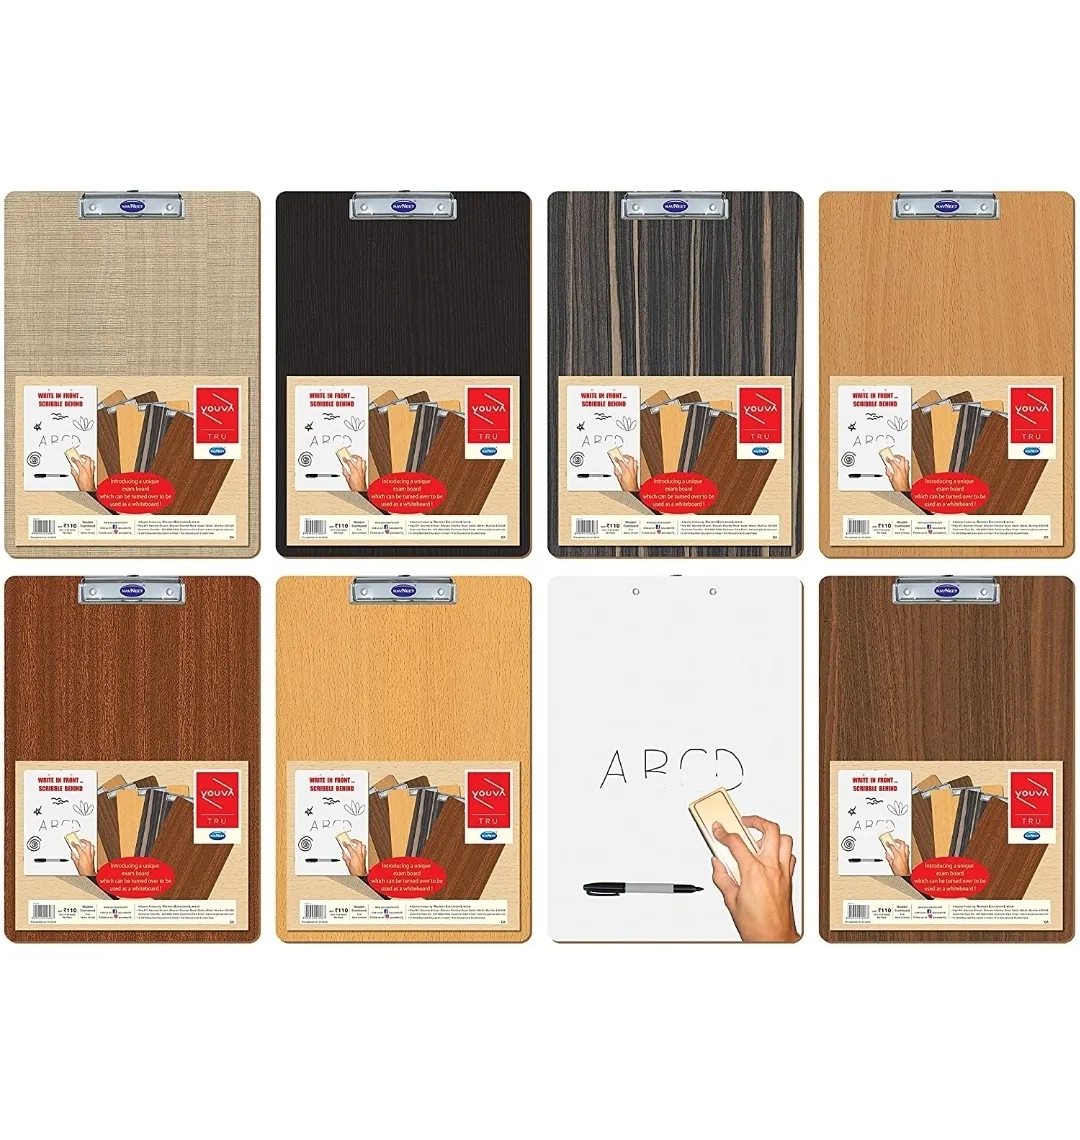 Navneet Youva Wooden Exam Board 24X34.5 cm Pack of 1